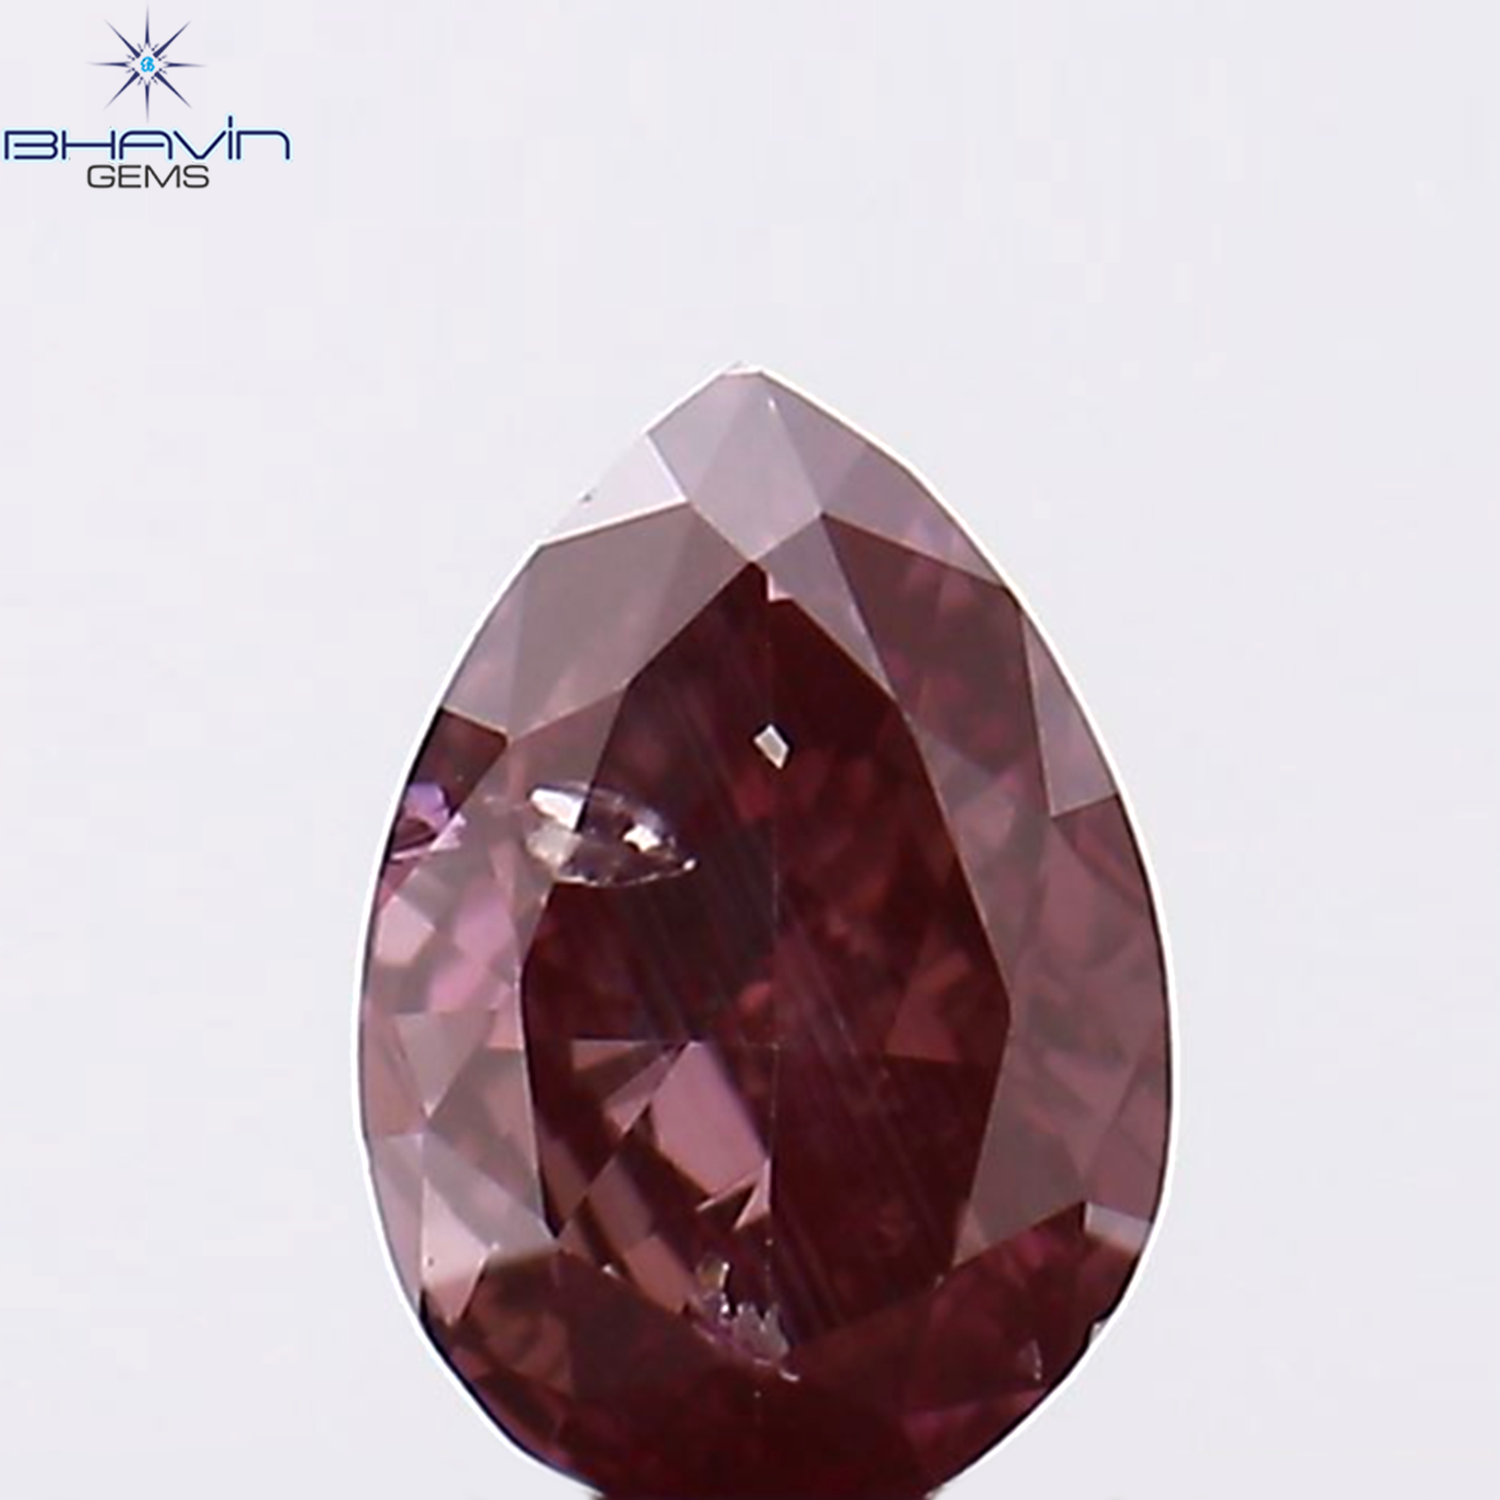 0.09 CT ペアシェイプ ナチュラル ダイヤモンド ピンク色 VS1 クラリティ (3.45 MM)